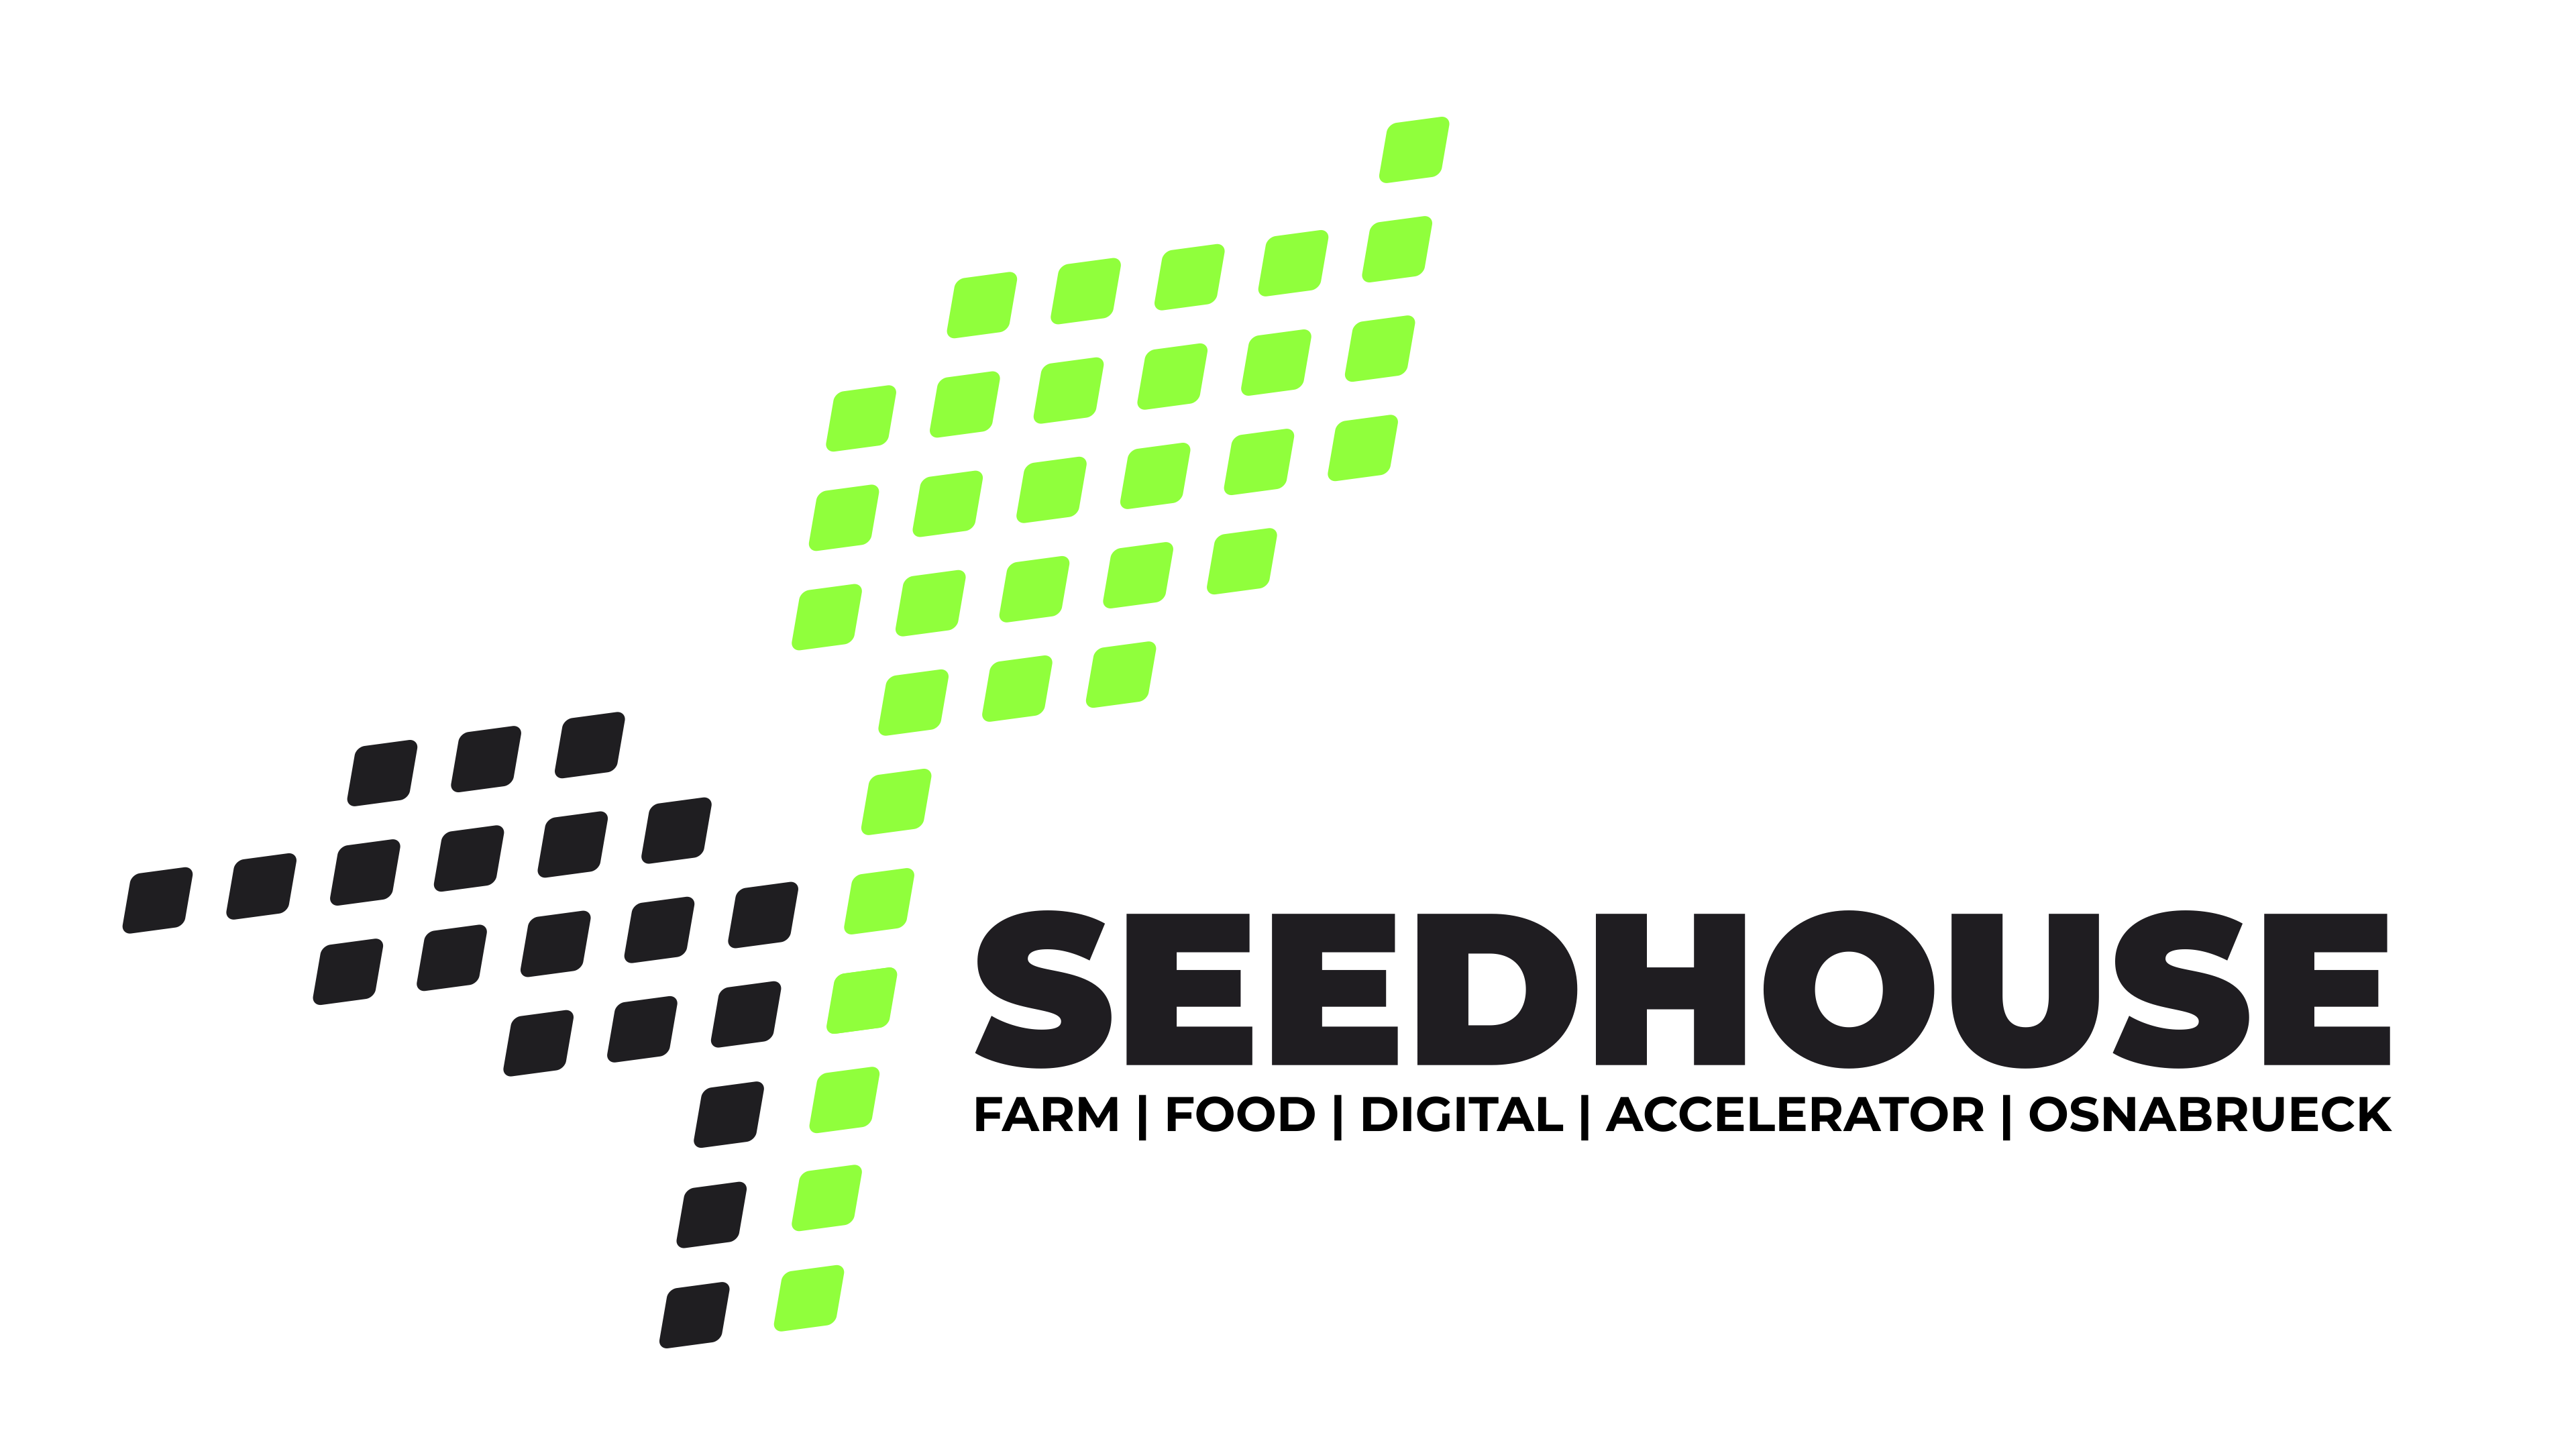 Seedhouse Accelerator